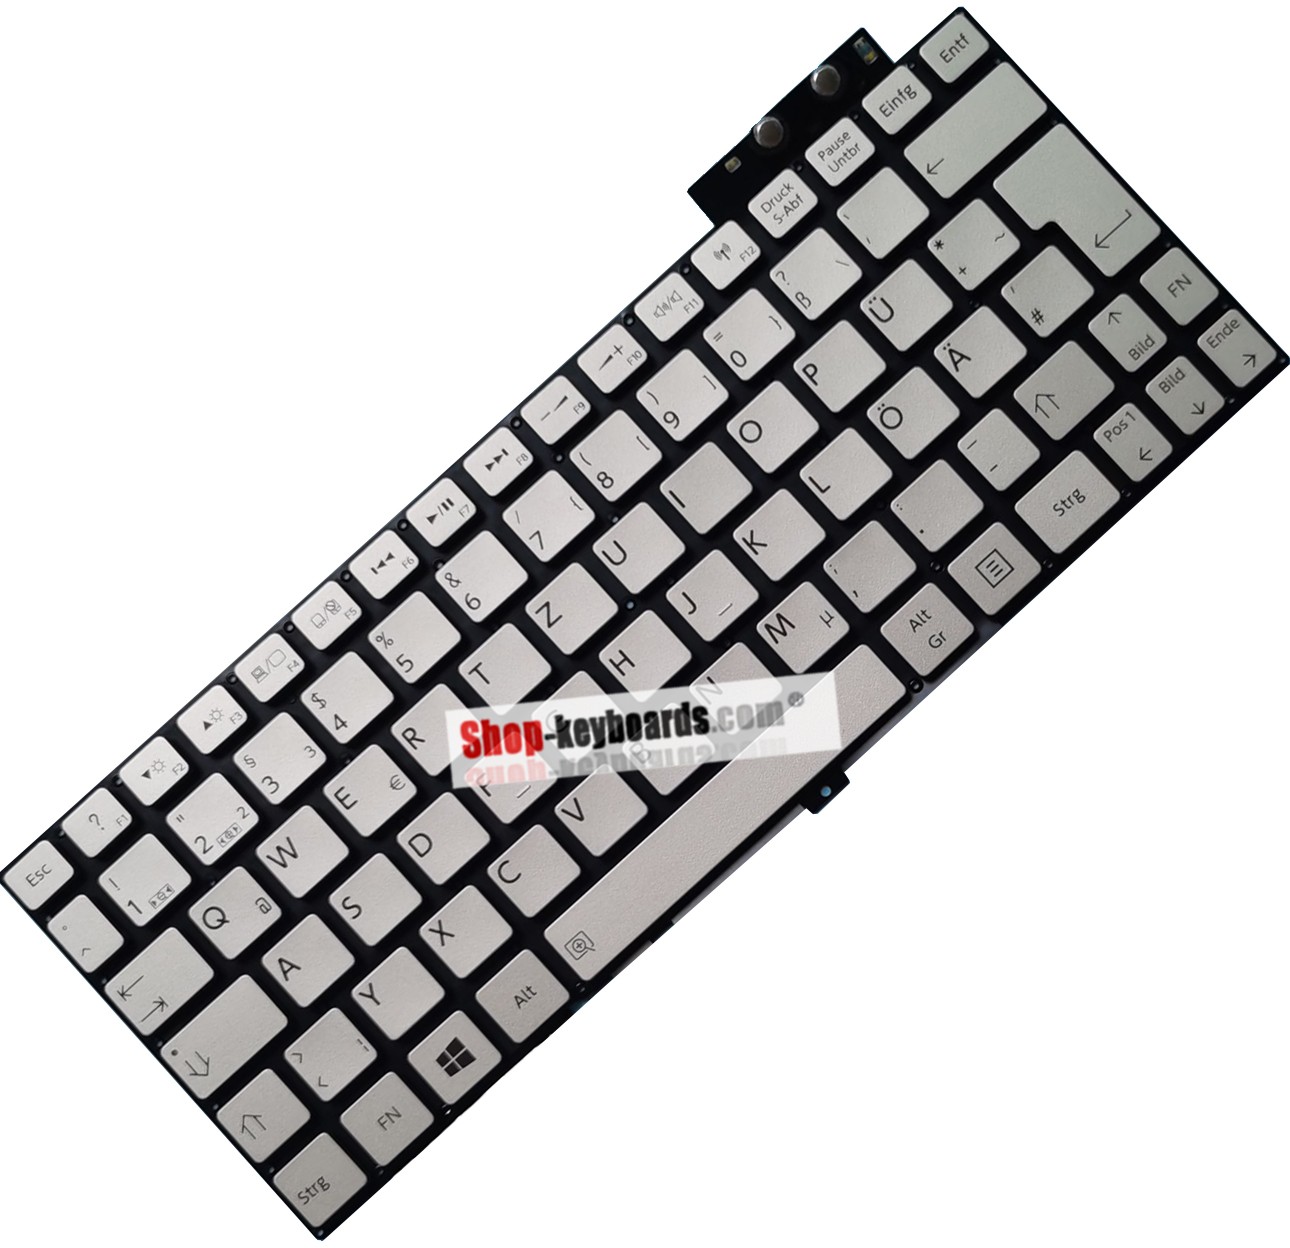 CNY MP-13N26U462005 Keyboard replacement